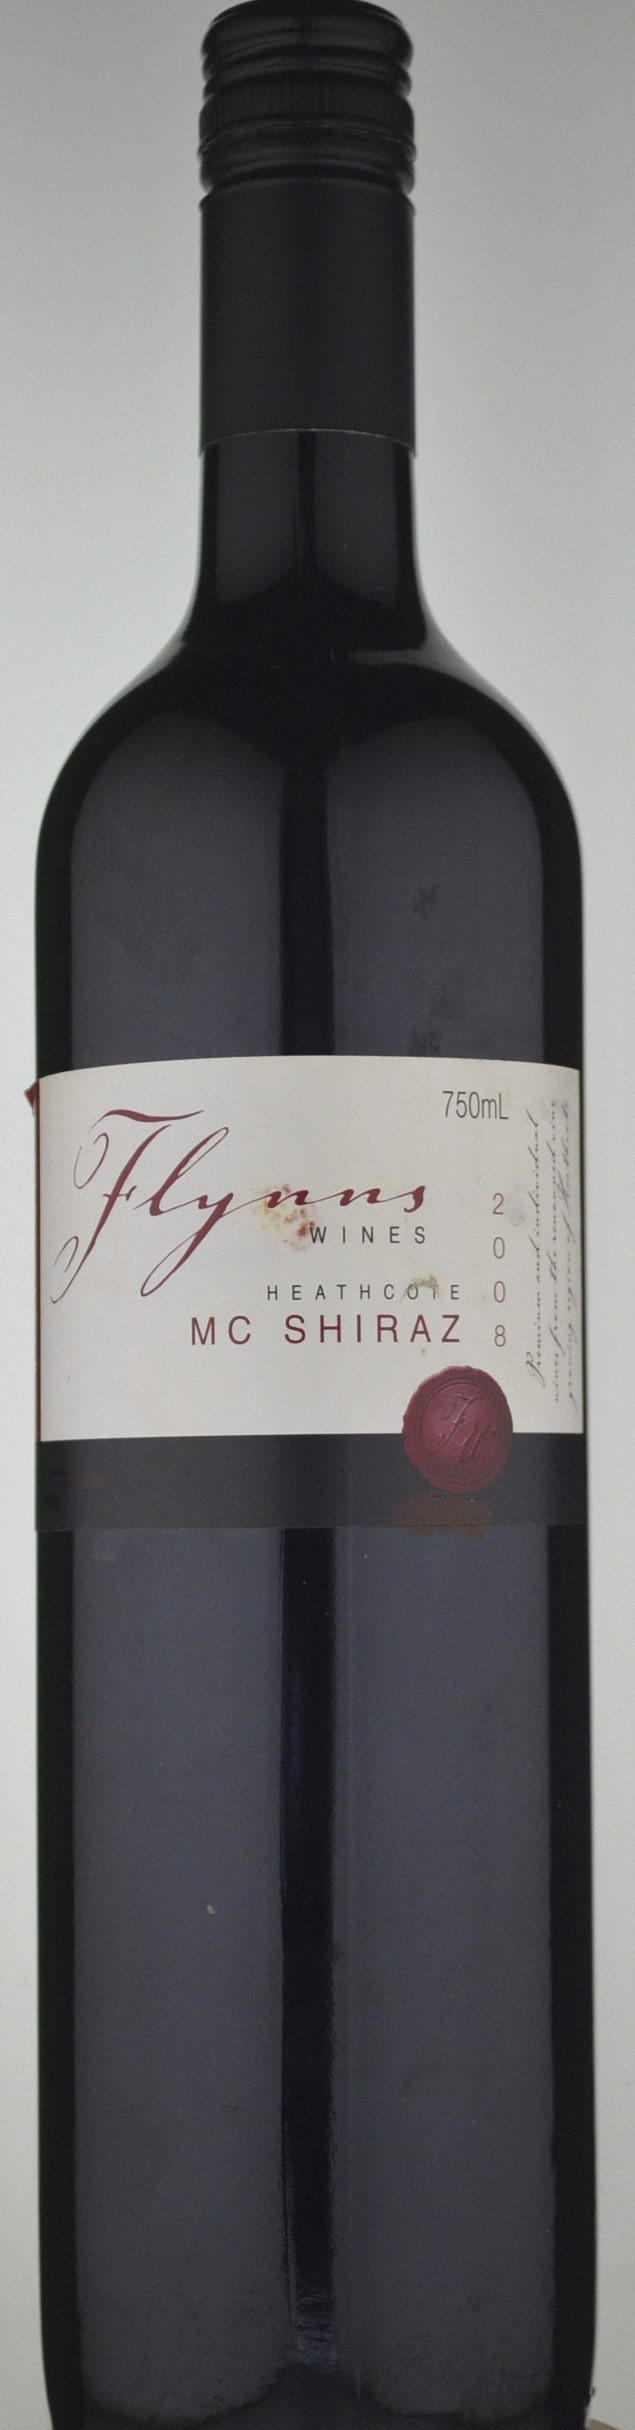 Flynns Wines Heathcote MC Shiraz 2008